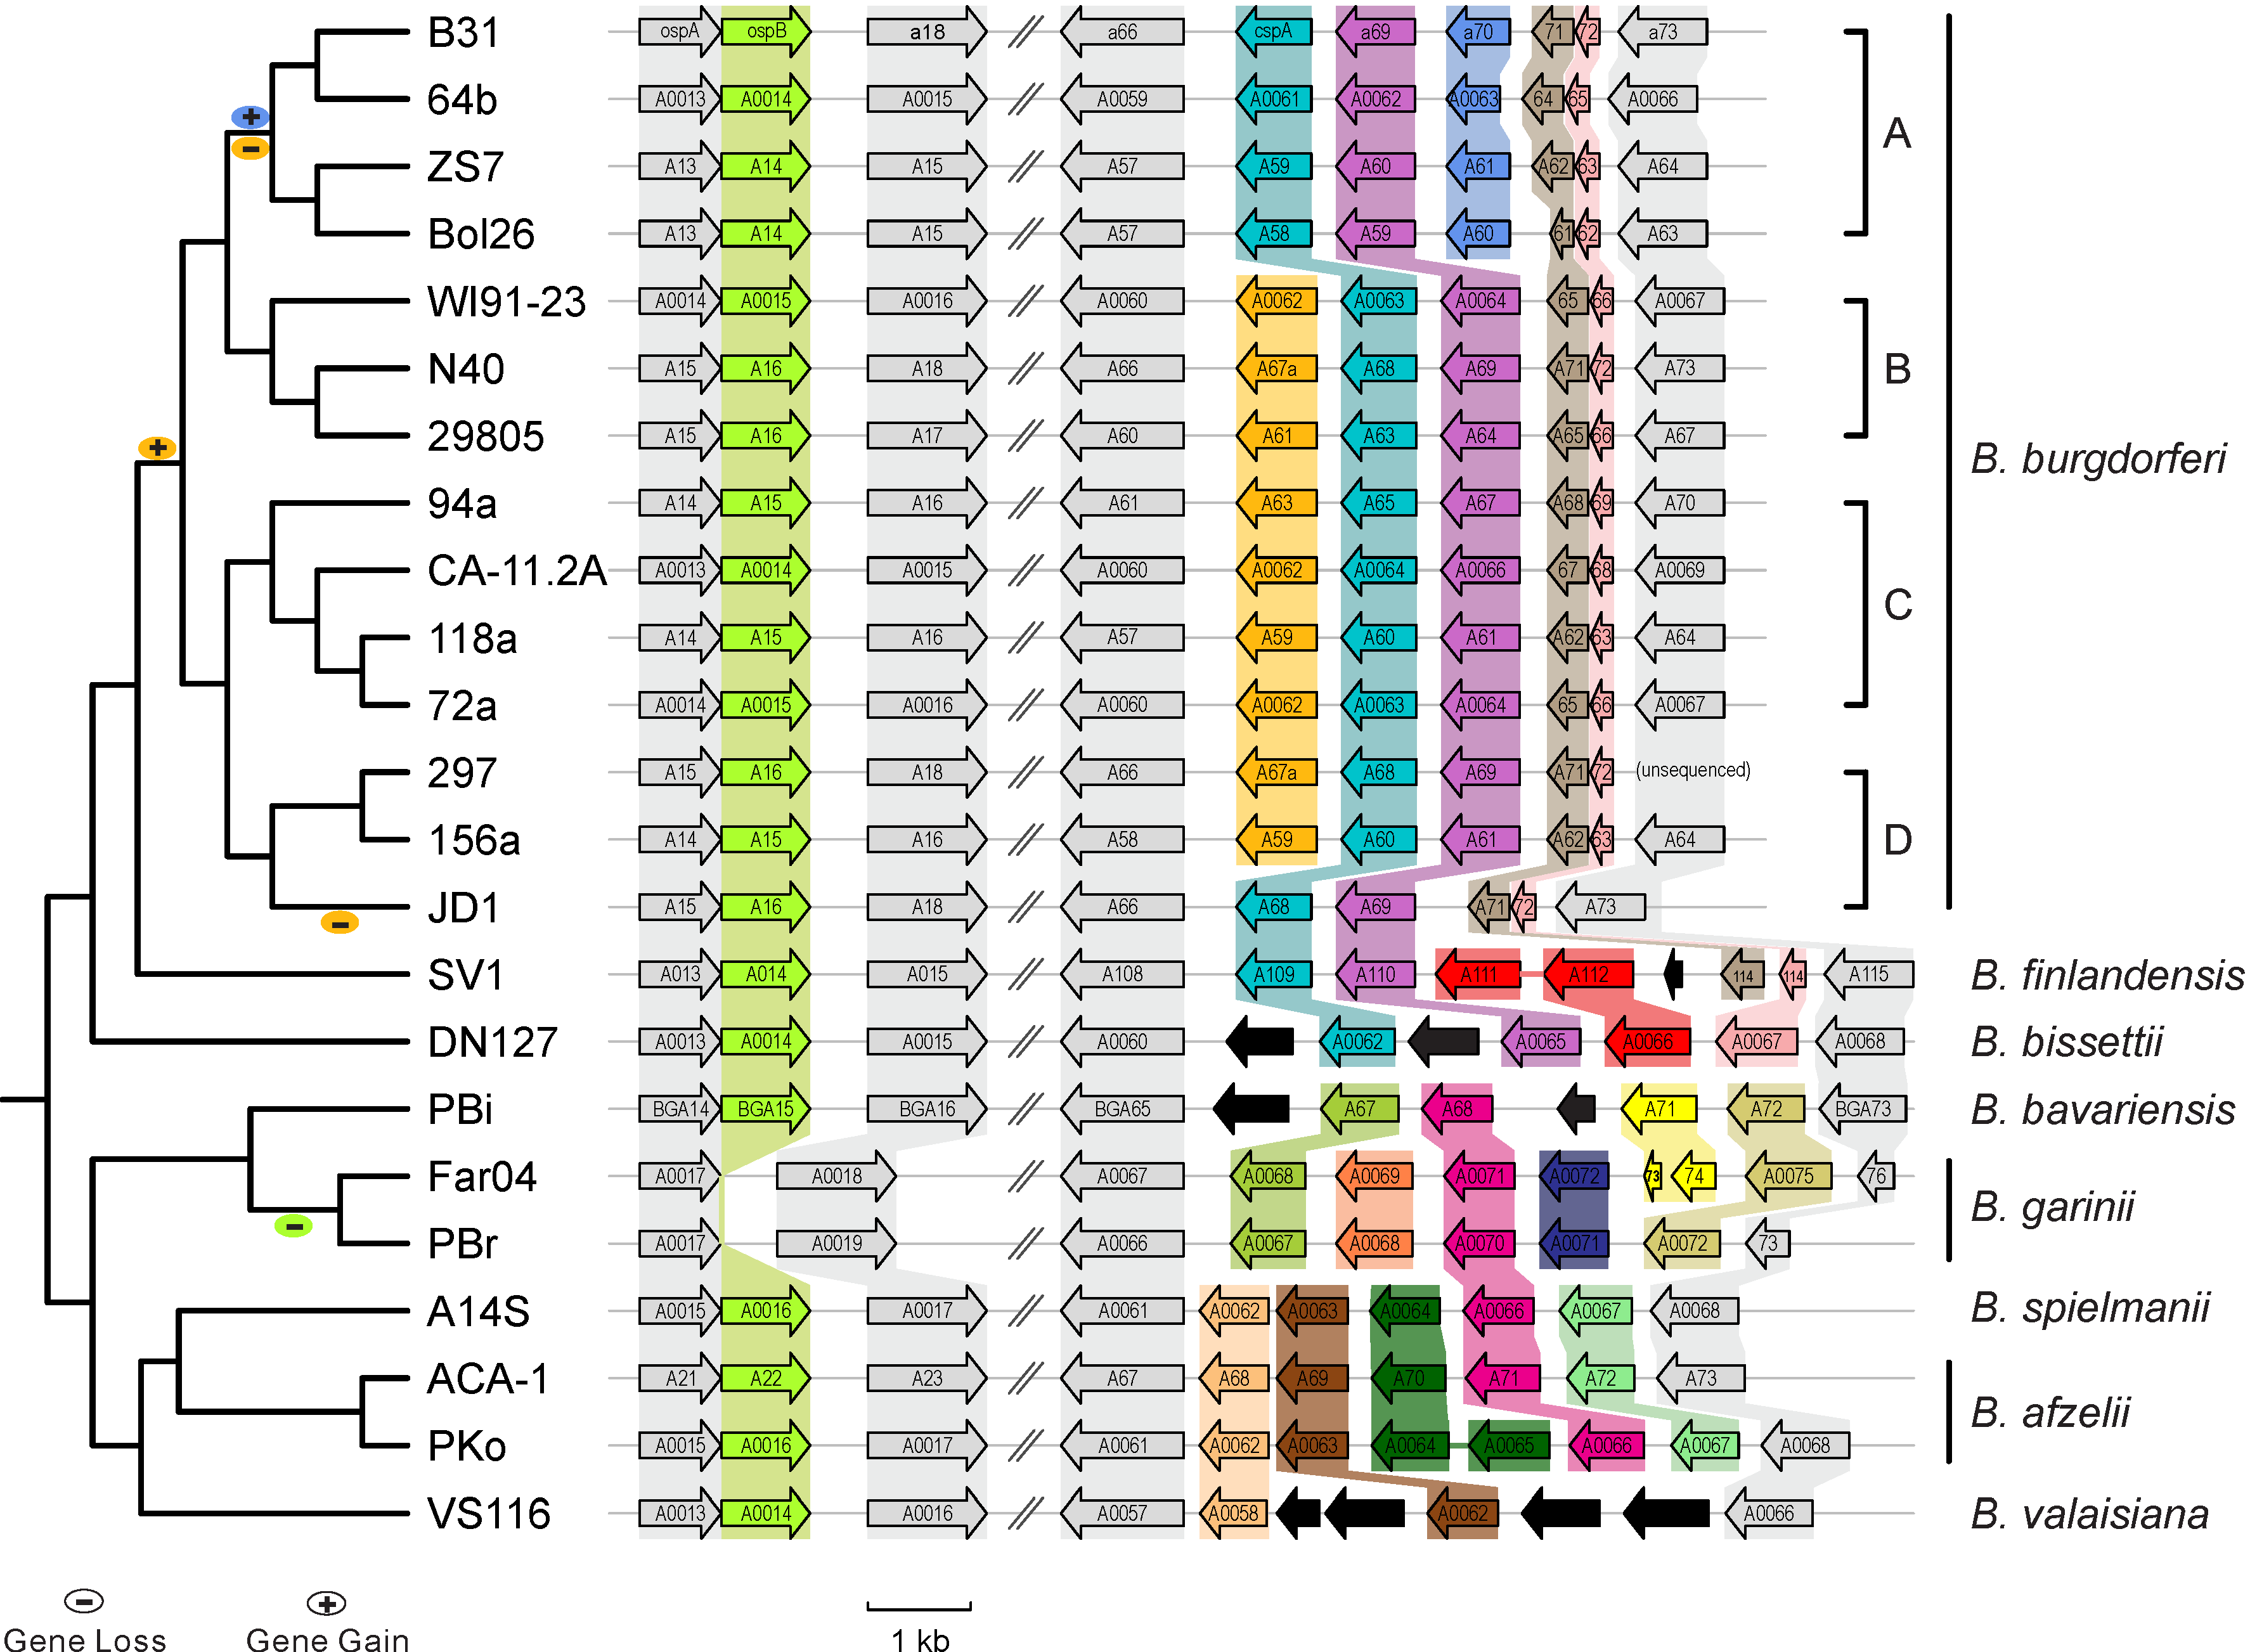 Gains & losses of host-defense genes among Lyme pathogen genomes (Qiu & Martin 2014)